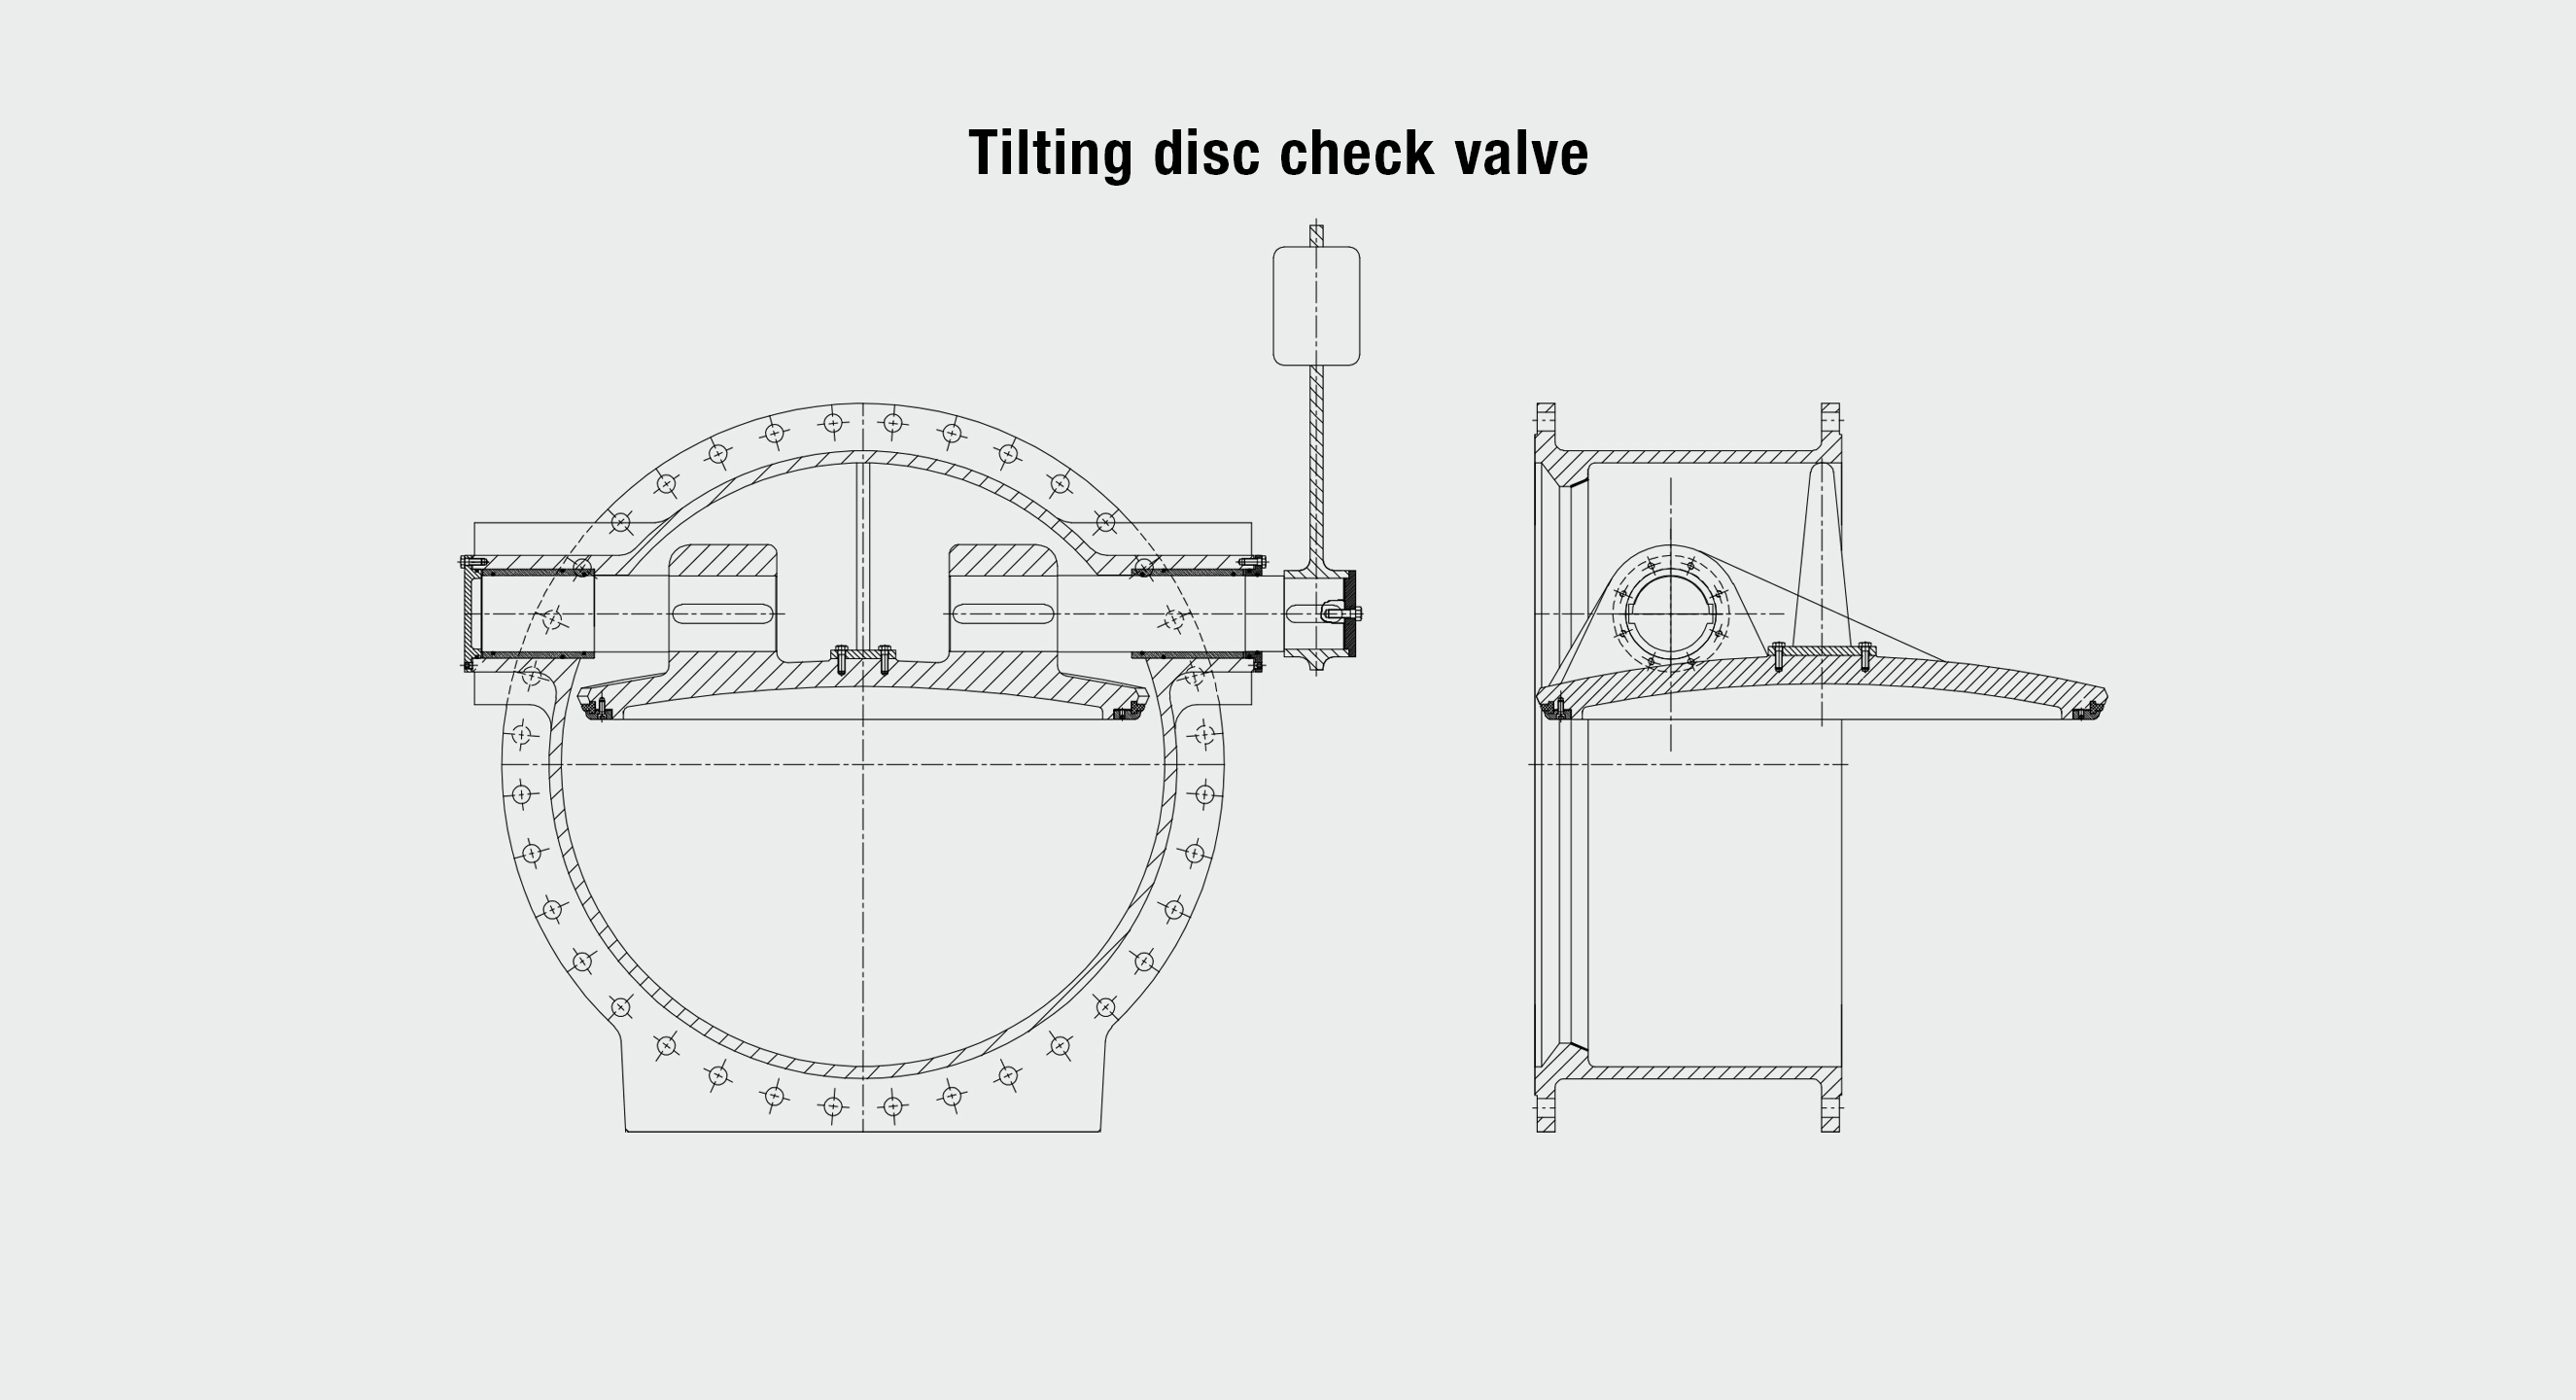 AVK tilting disc check valve drawings